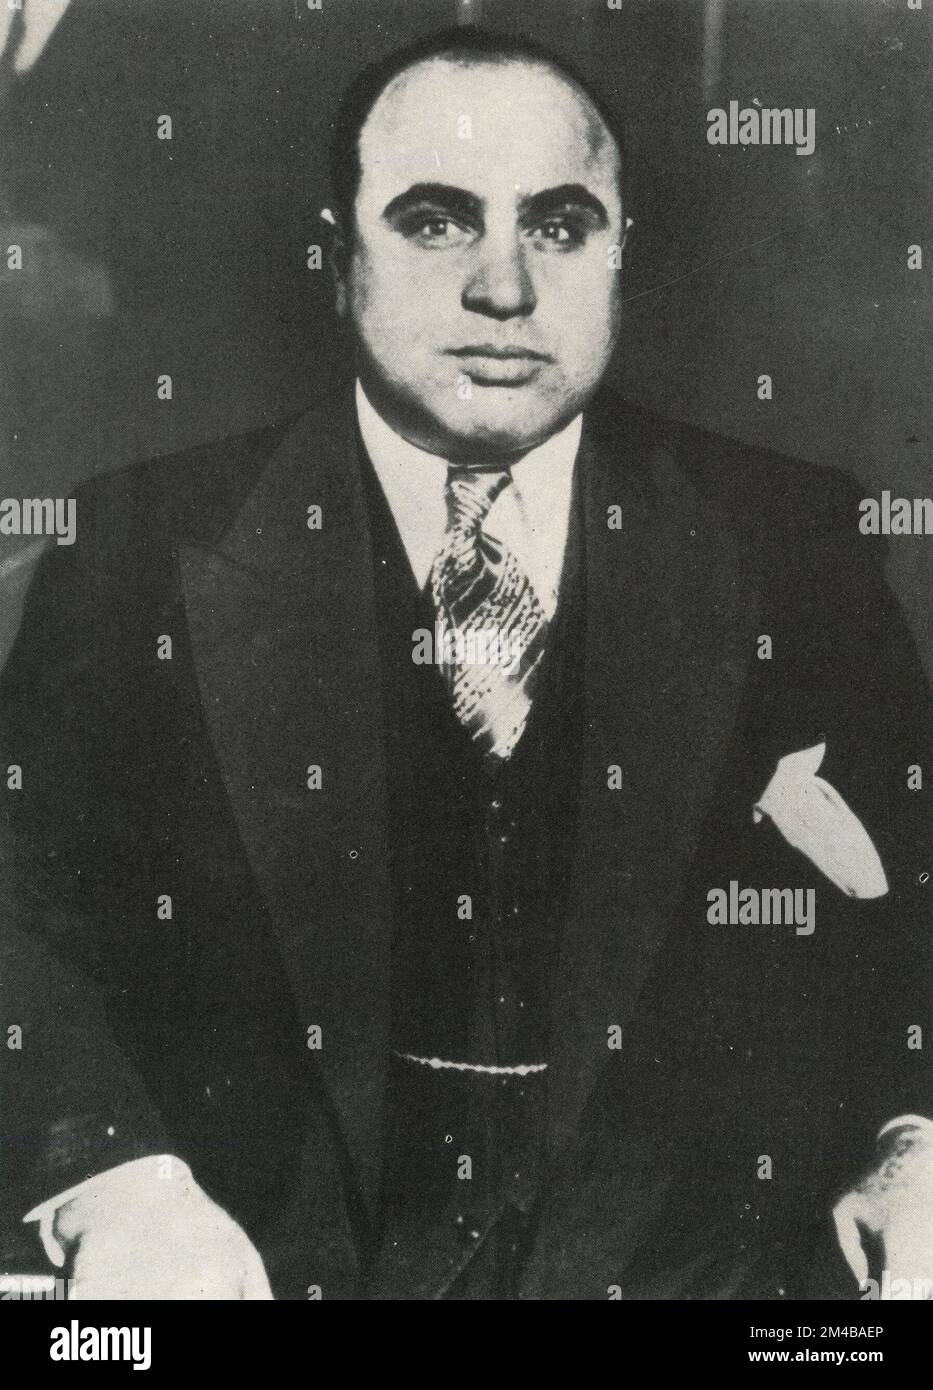 Portrait of American gangster Al Capone, USA 1930s Stock Photo